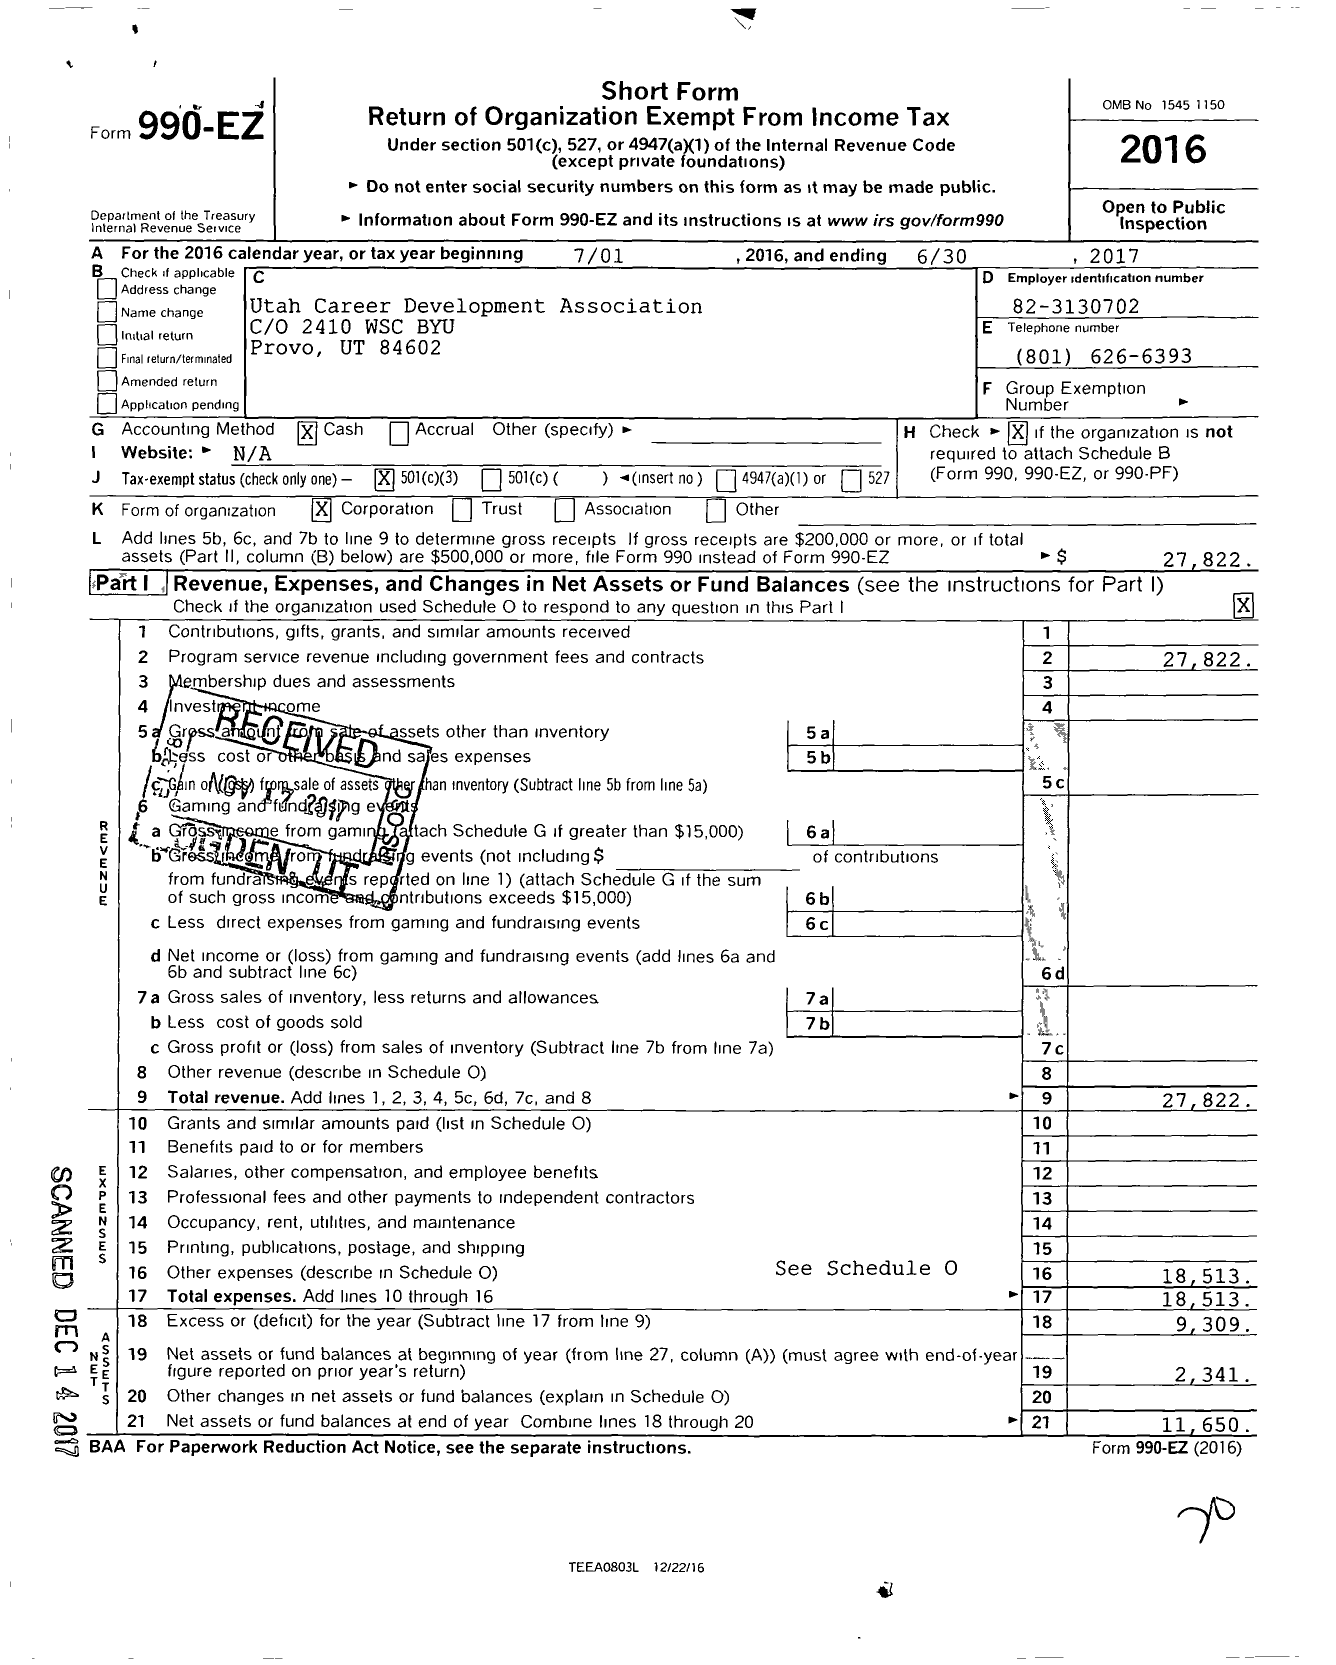 Image of first page of 2016 Form 990EZ for Utah Career Development Association